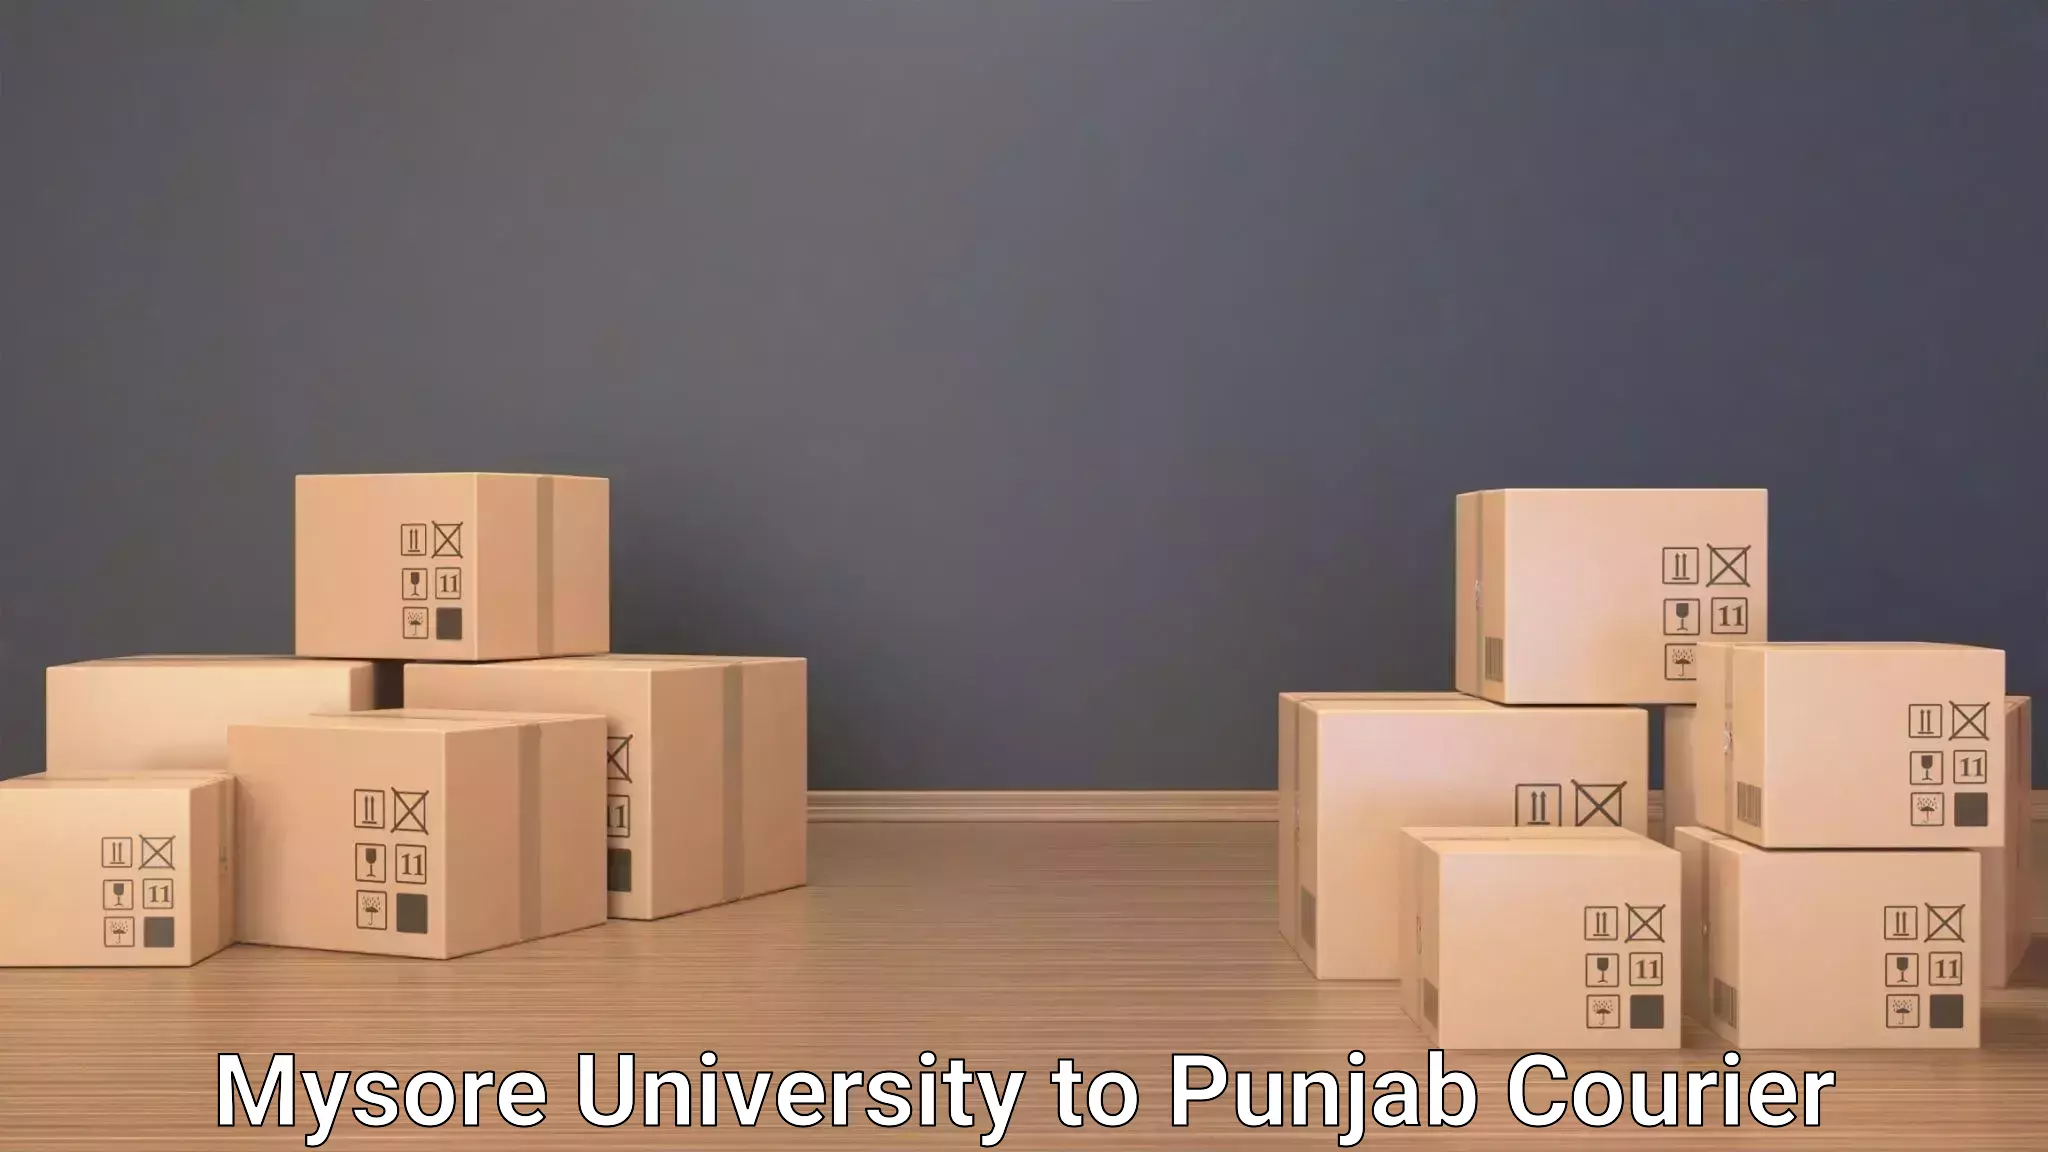 Baggage transport logistics Mysore University to Punjab